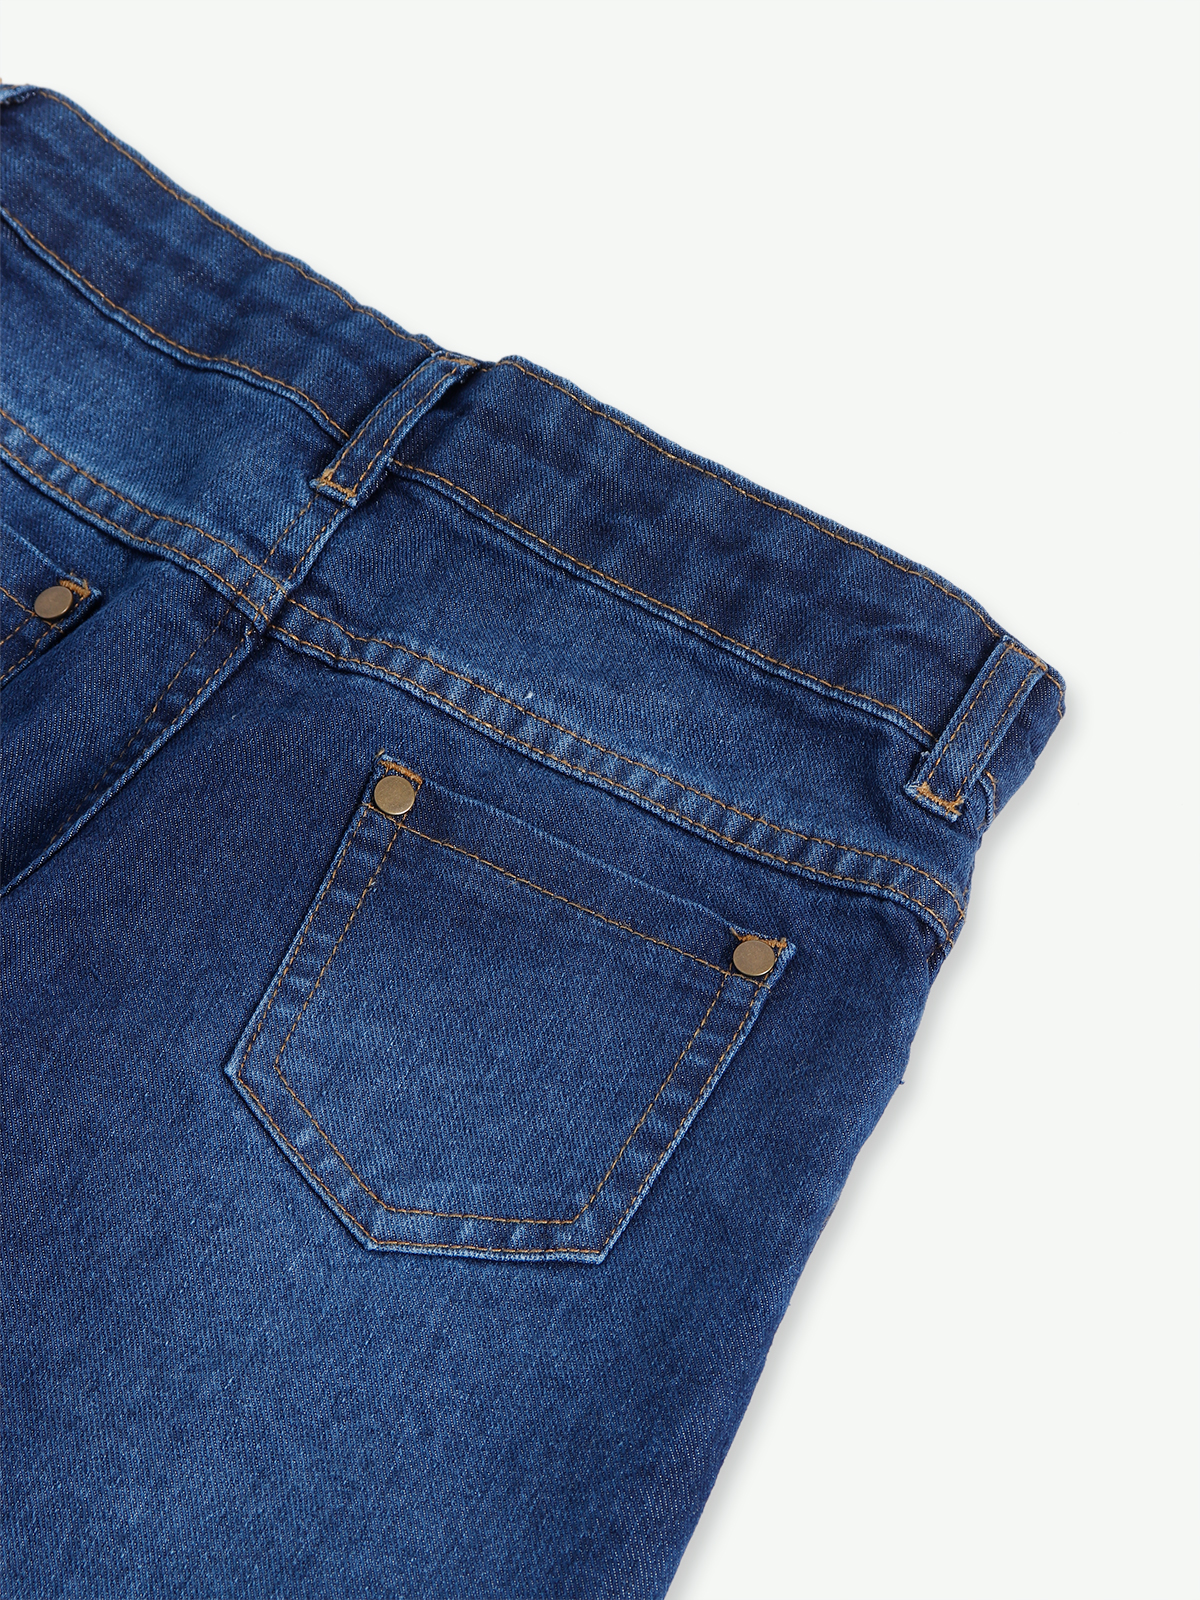 Leo n Babes indigo blue wide leg jeans - G3-GJE0685 